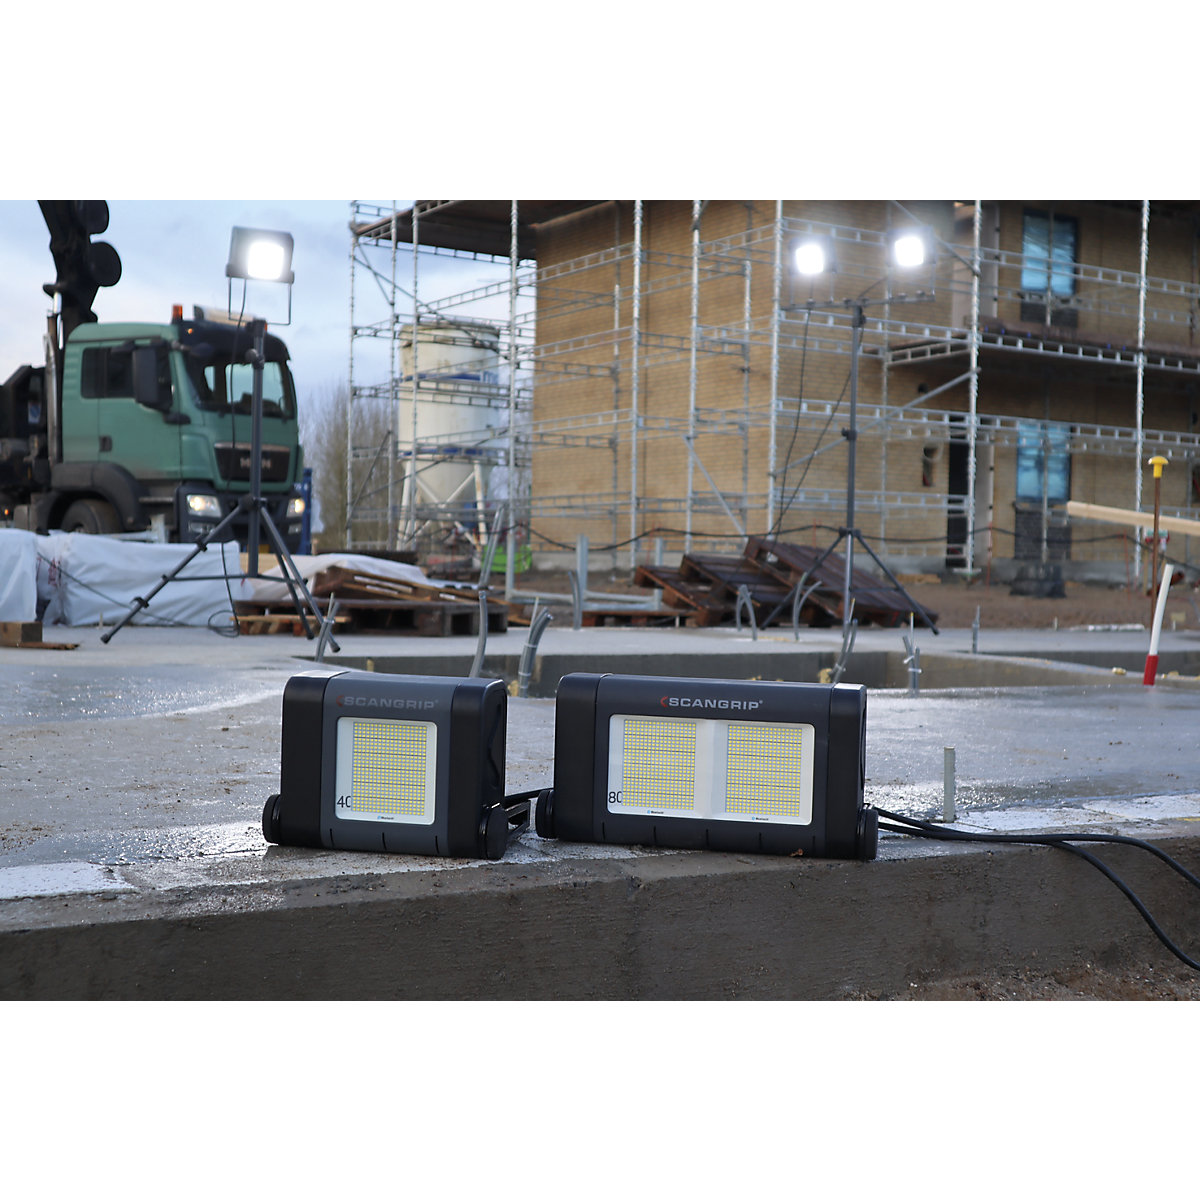 Proiector LED de șantier SITE LIGHT 40 – SCANGRIP (Imagine produs 14)-13